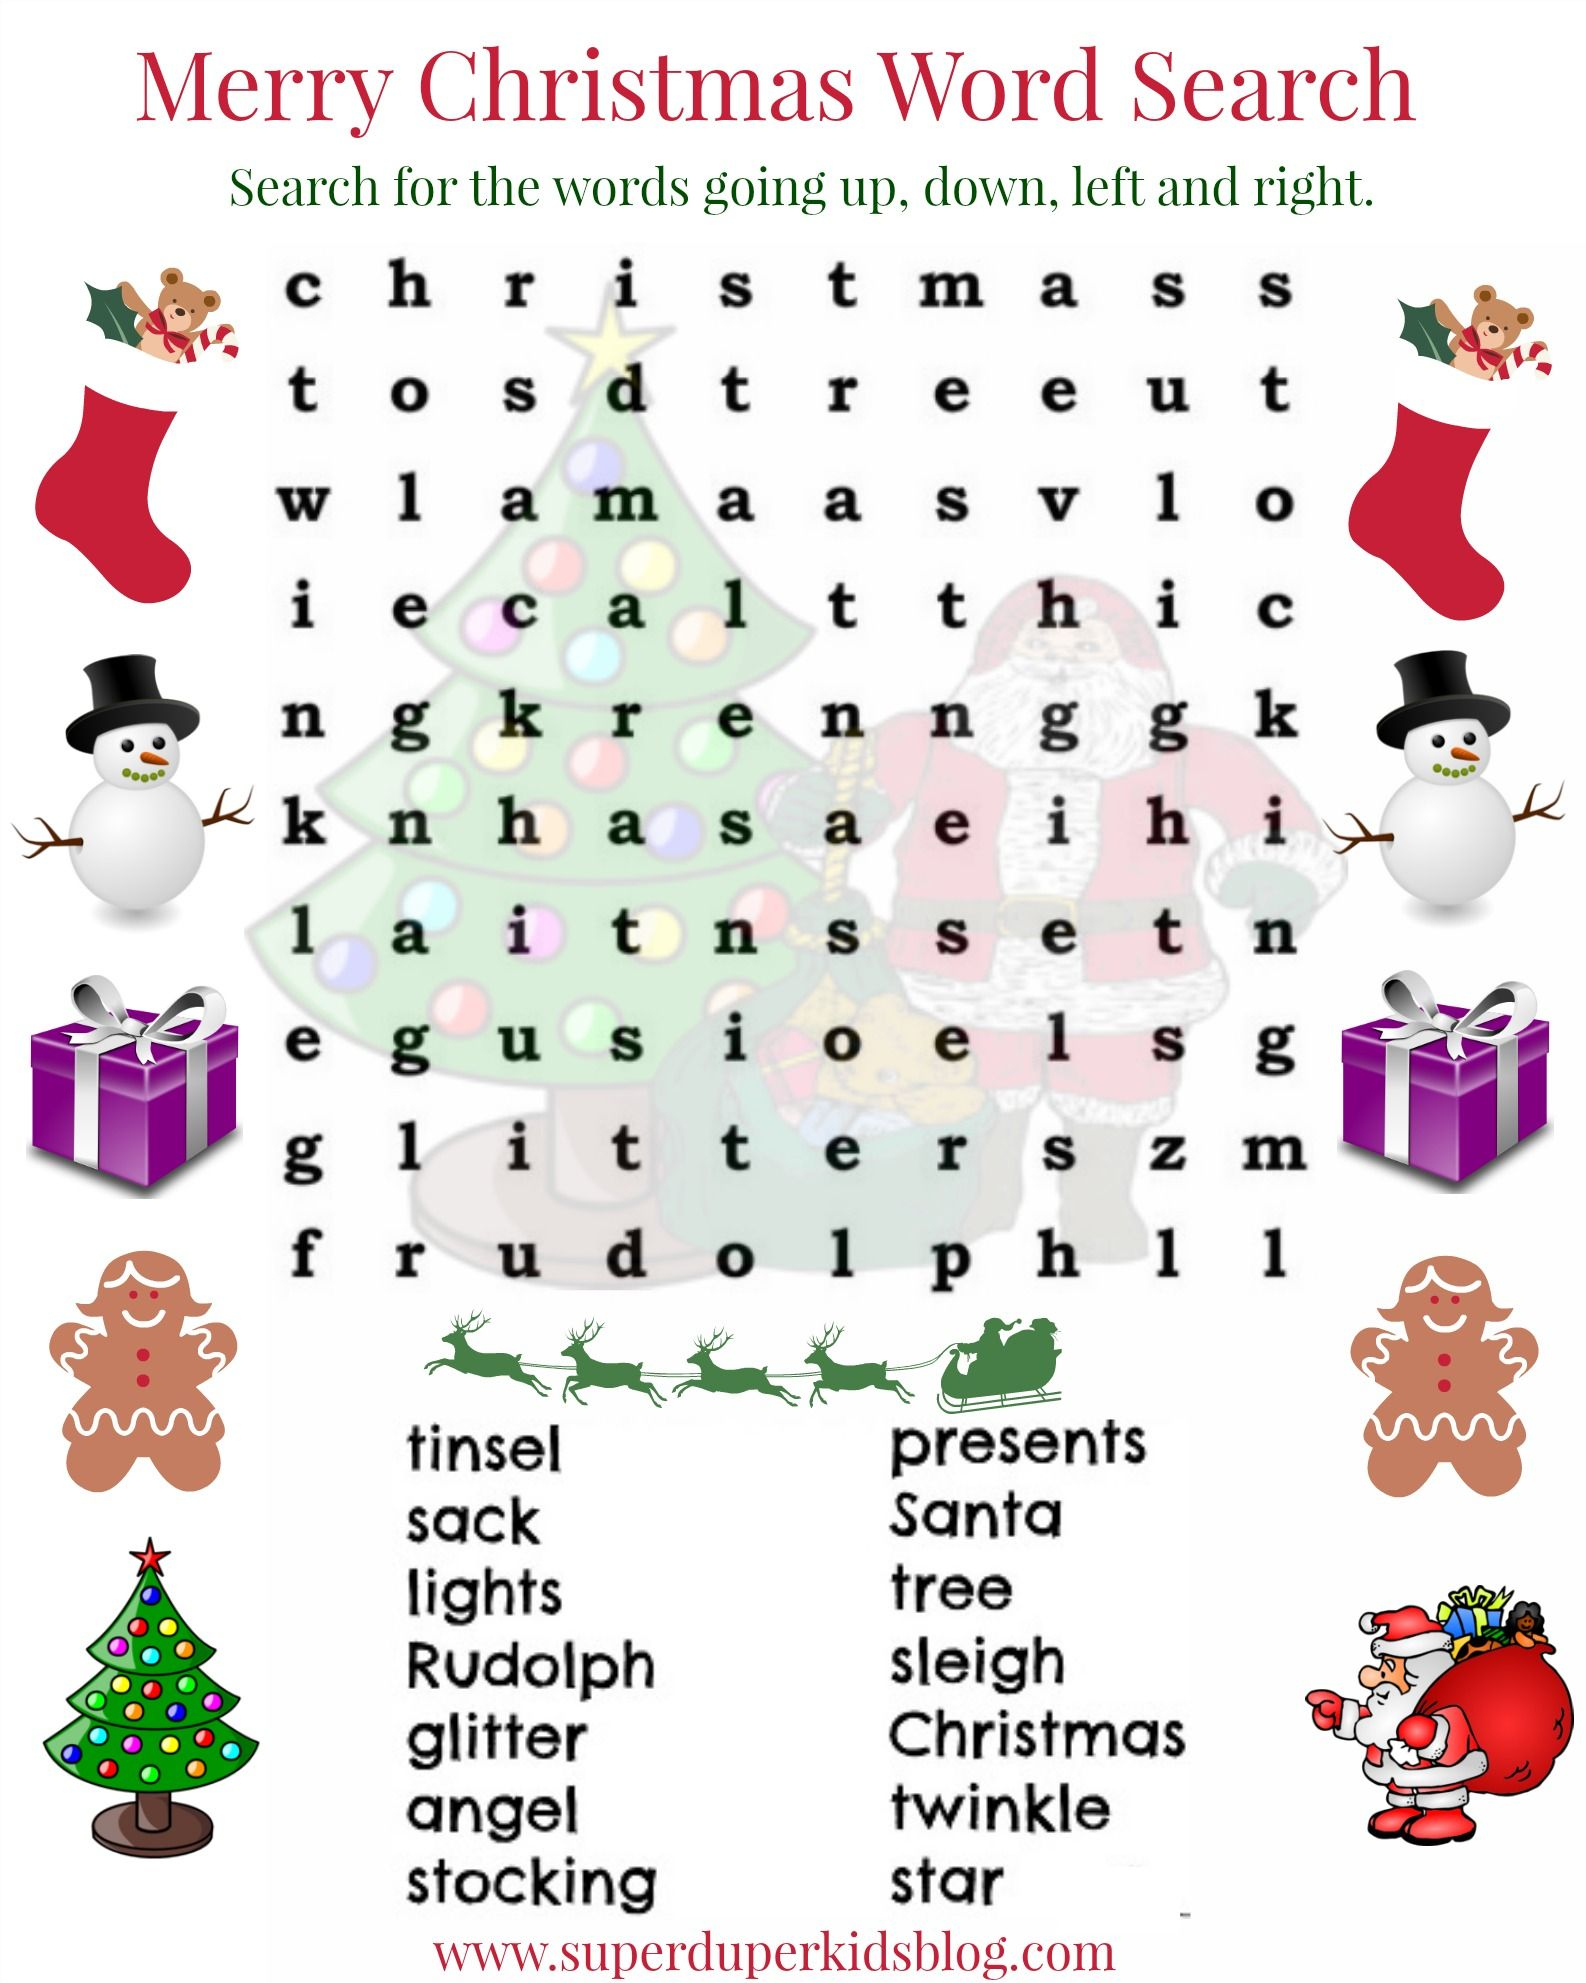 Pinsuperduperkidsblog On Free Printables | Pinterest | Christmas - Free Printable Christmas Word Search